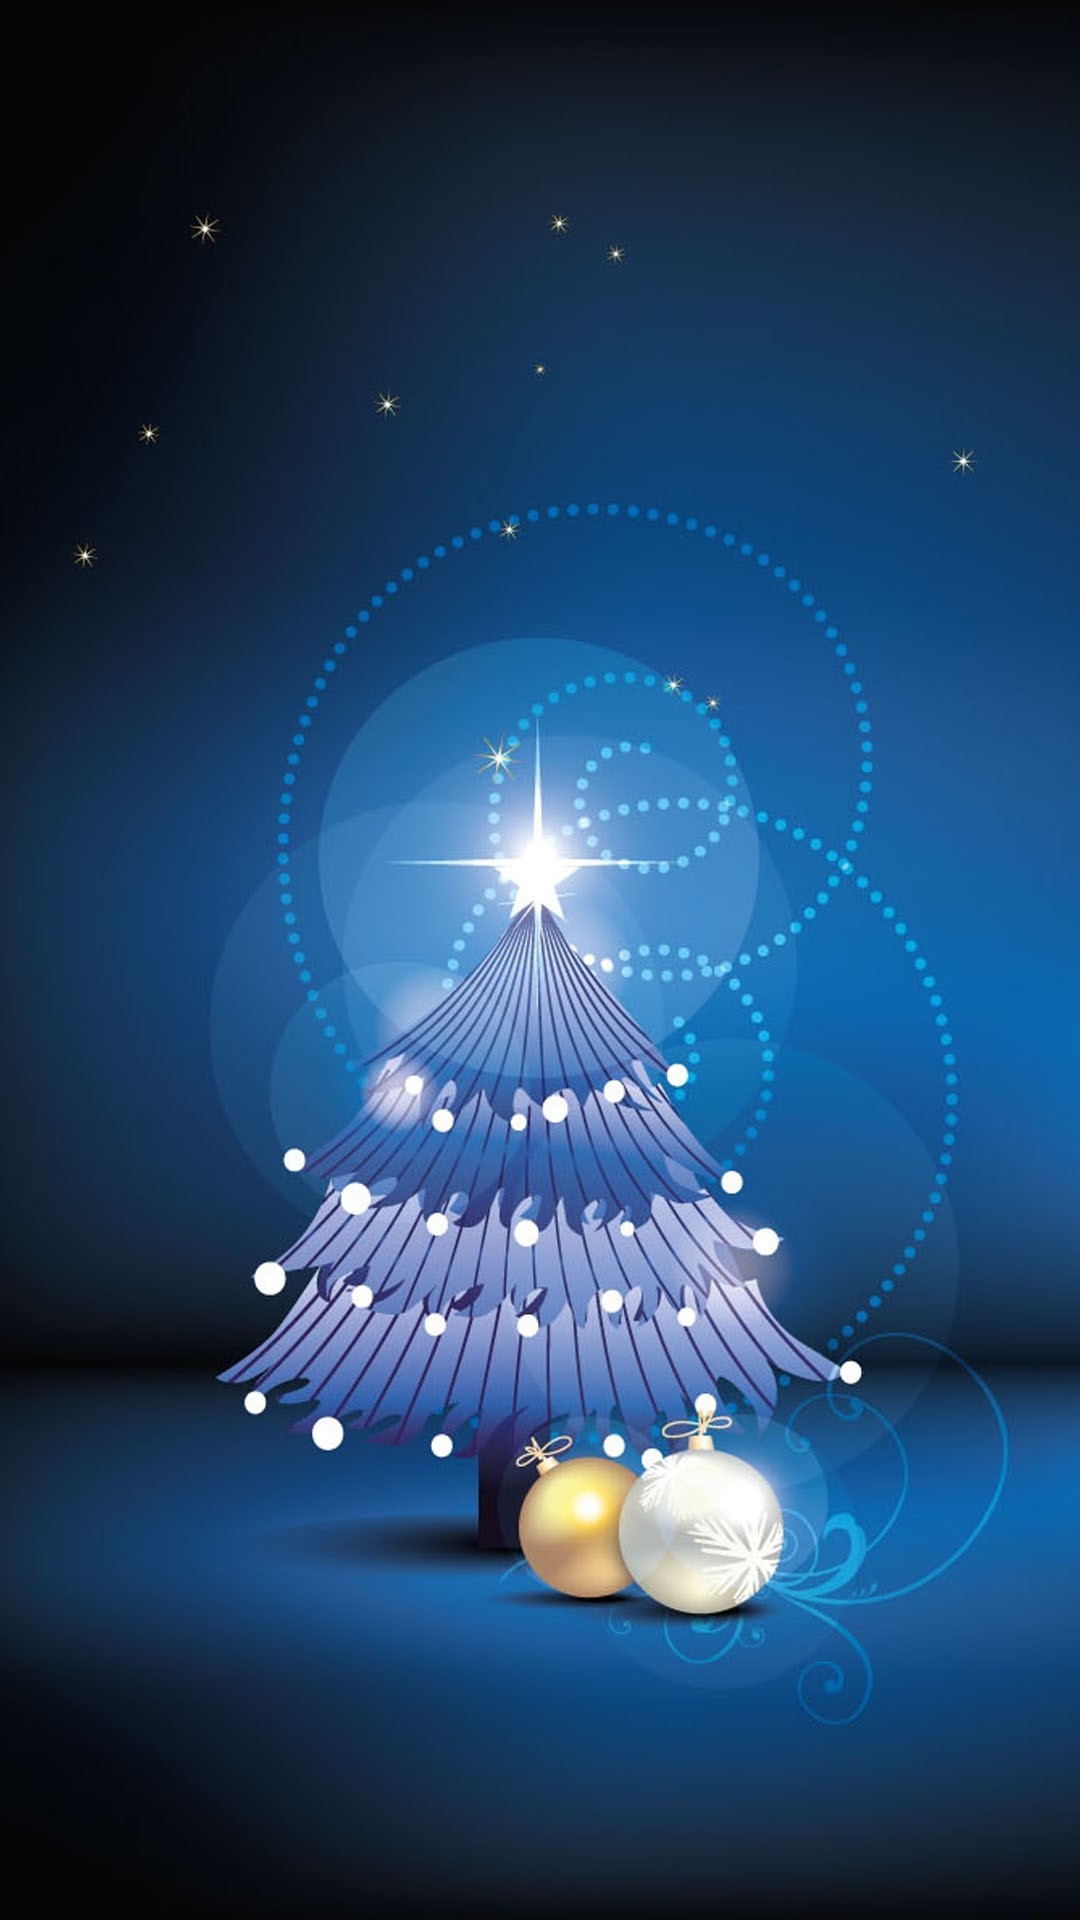 Night Christmas tree iPhone 6 plus wallpaper – stars